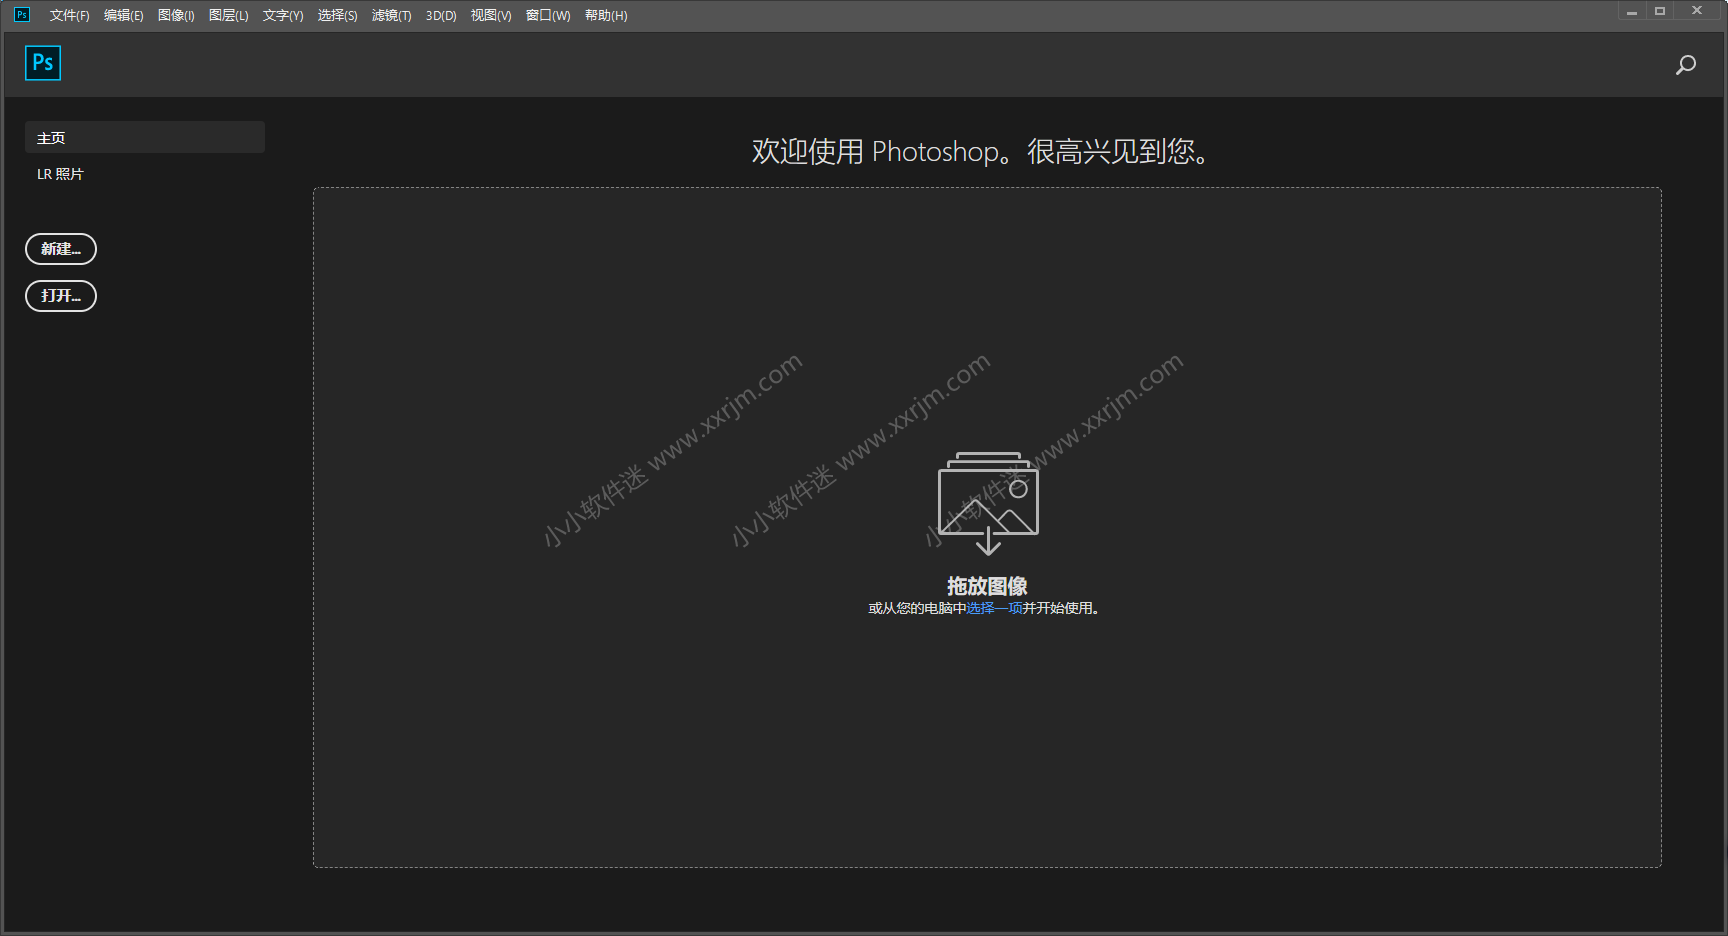 photoshop cc2019官方中文版下载地址和安装教程